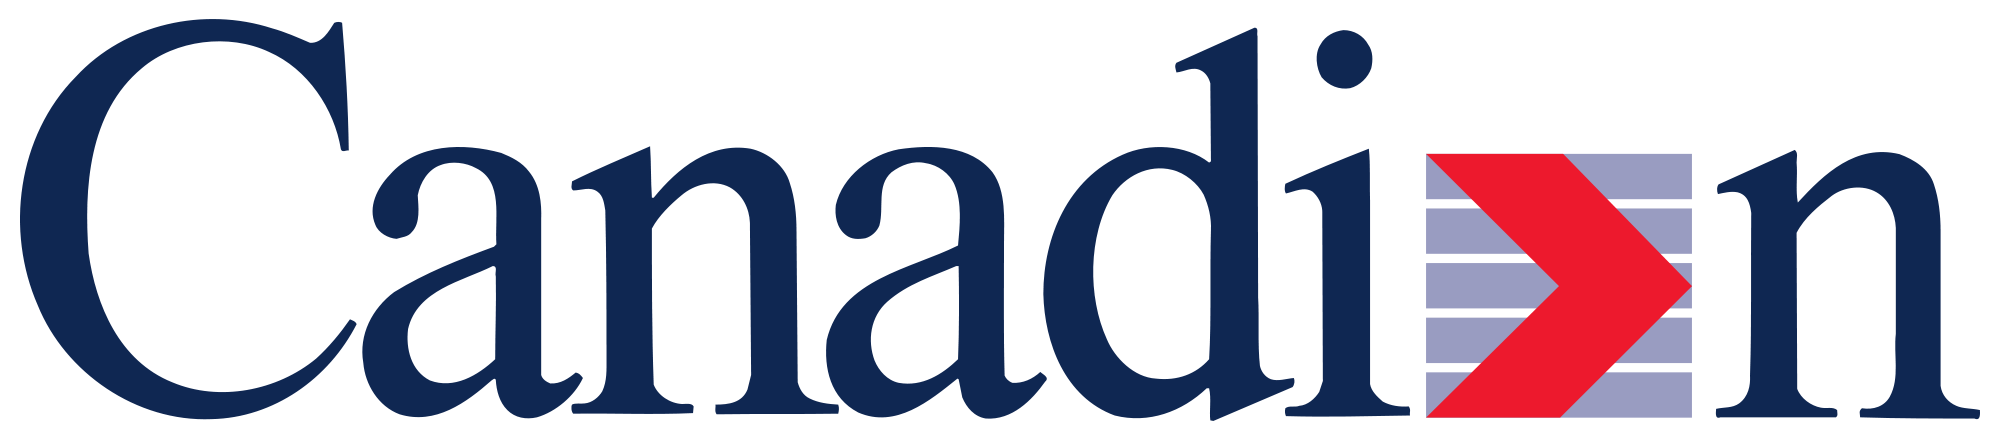 Canadian Logo - Canadian Airlines logo (historic).svg